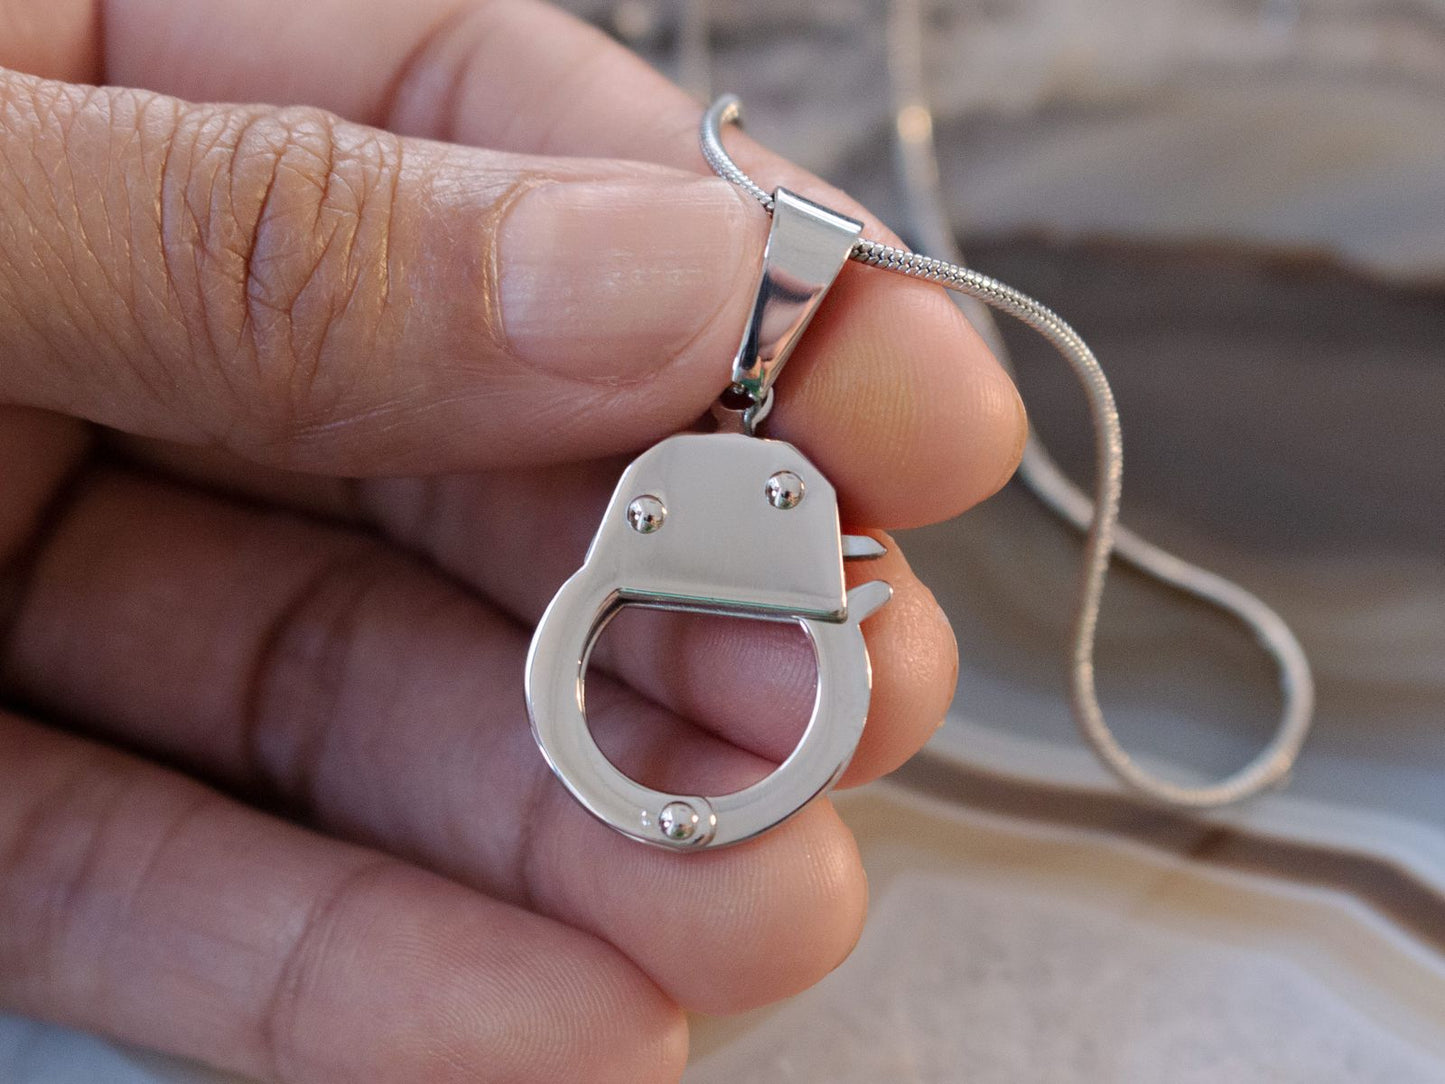 Stainless steel BDSM handcuff pendant